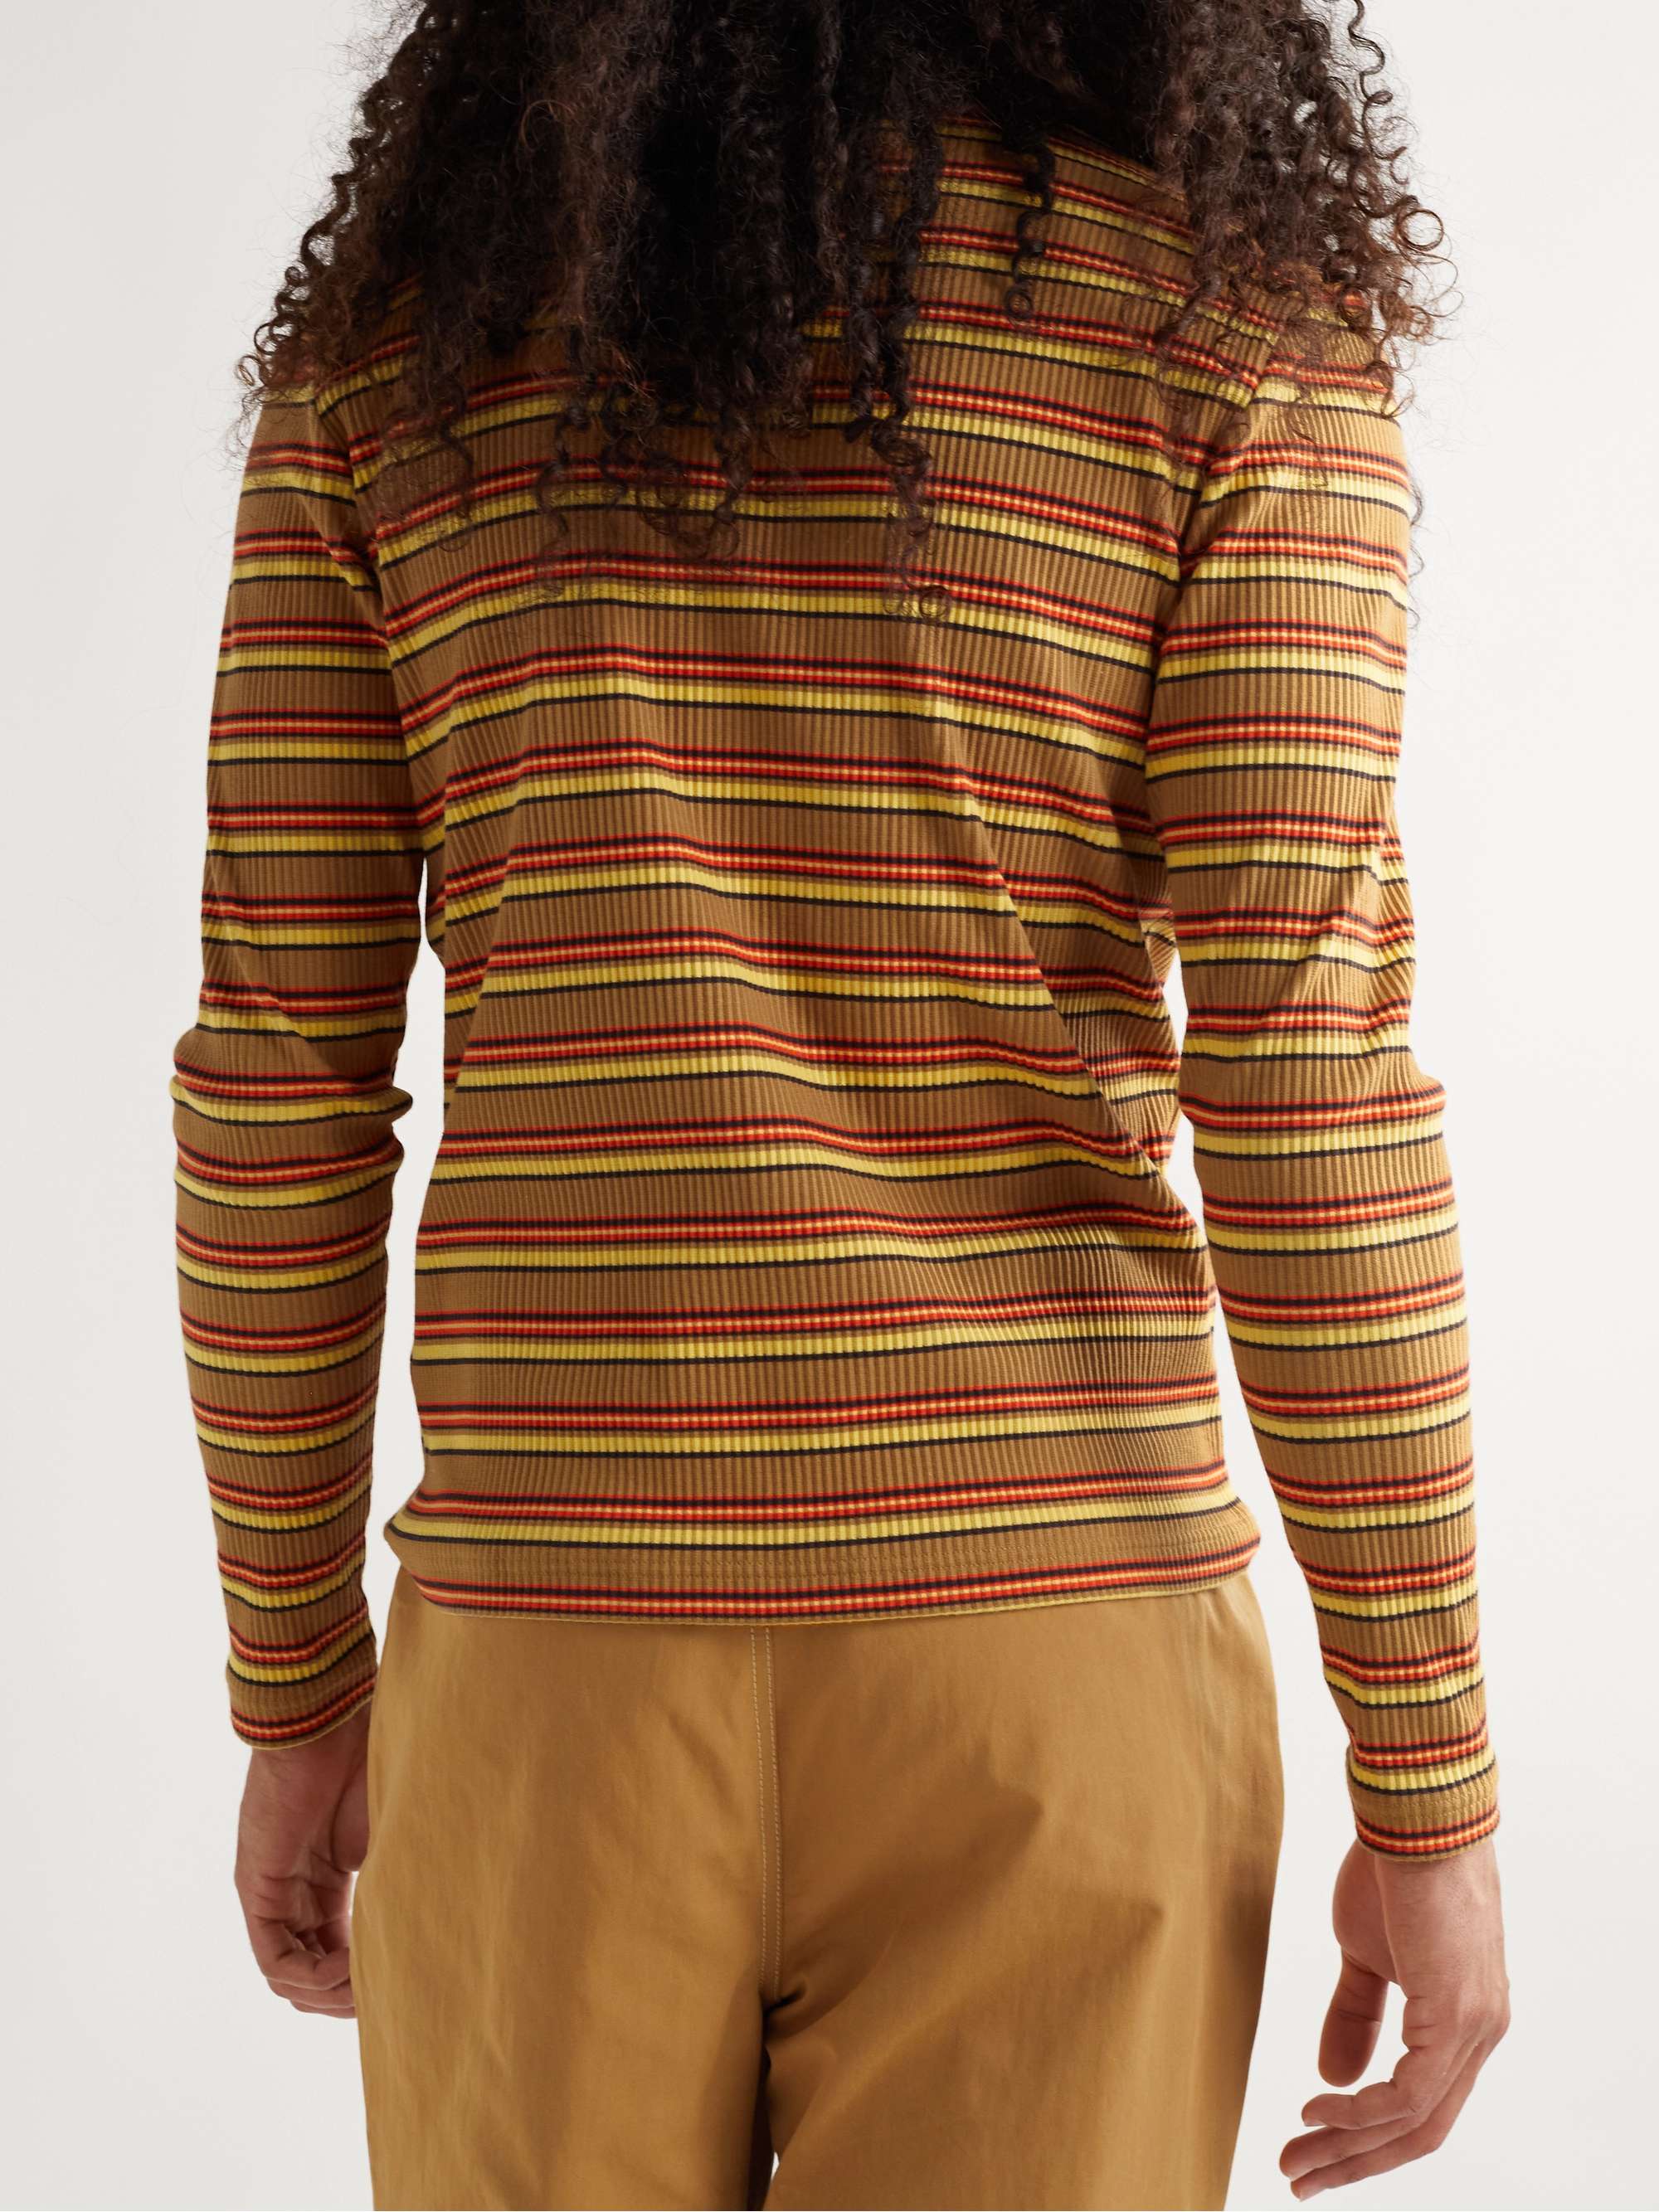 ADIDAS CONSORTIUM + Wales Bonner Slim-Fit Striped Ribbed Cotton-Blend T-Shirt